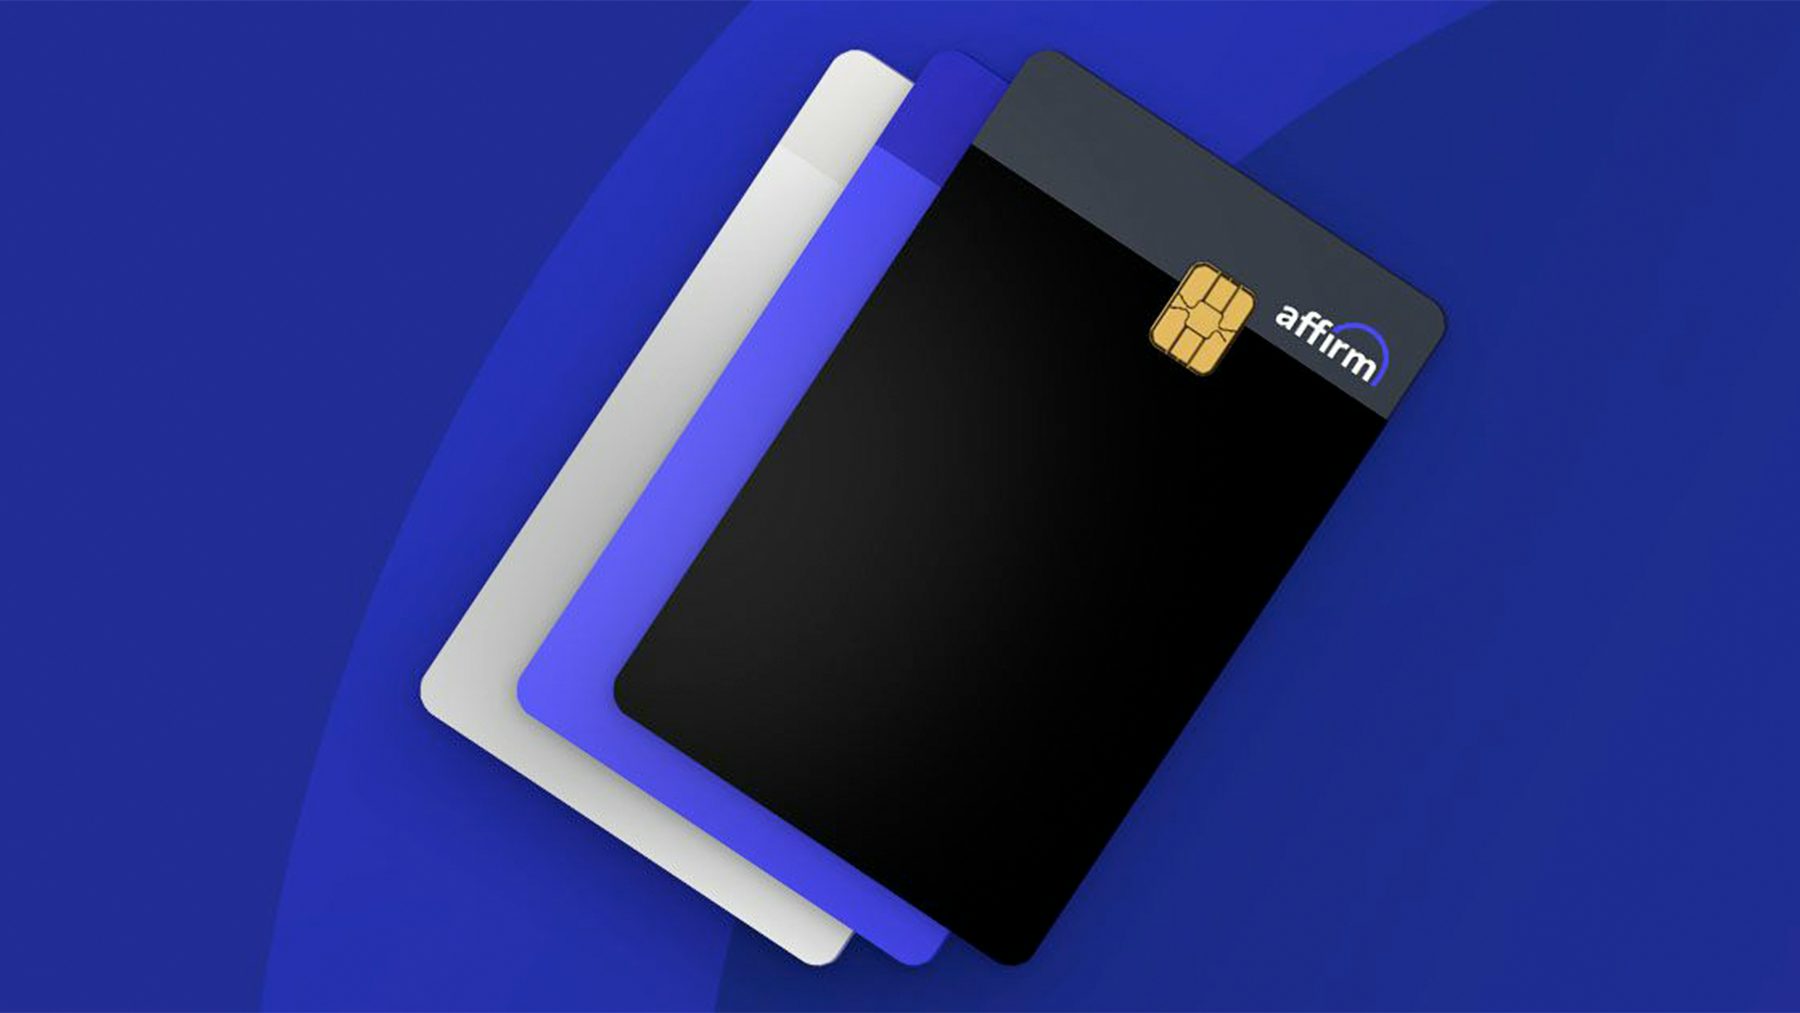 Affirm's debit card. Courtesy.